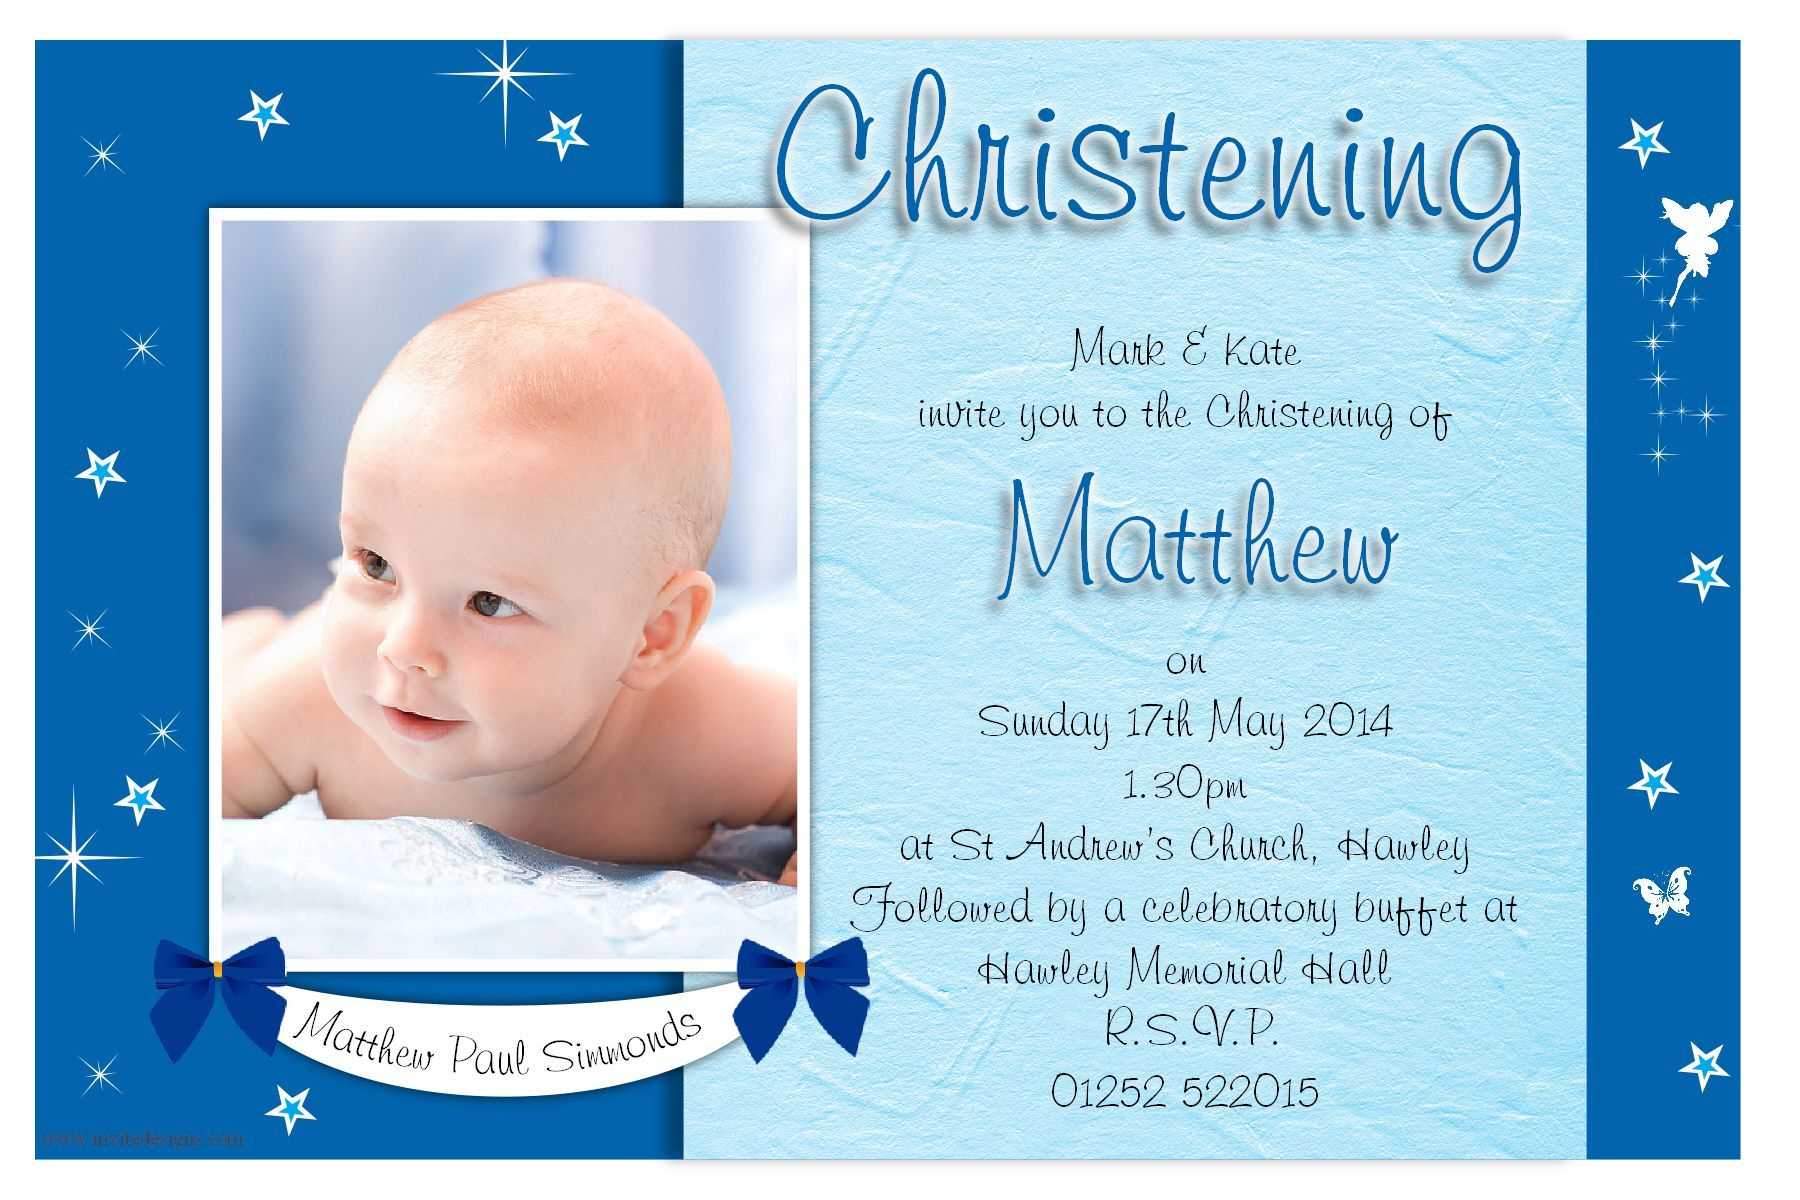 Free Christening Invitation Template Printable In 2019 Inside Free Christening Invitation Cards Templates